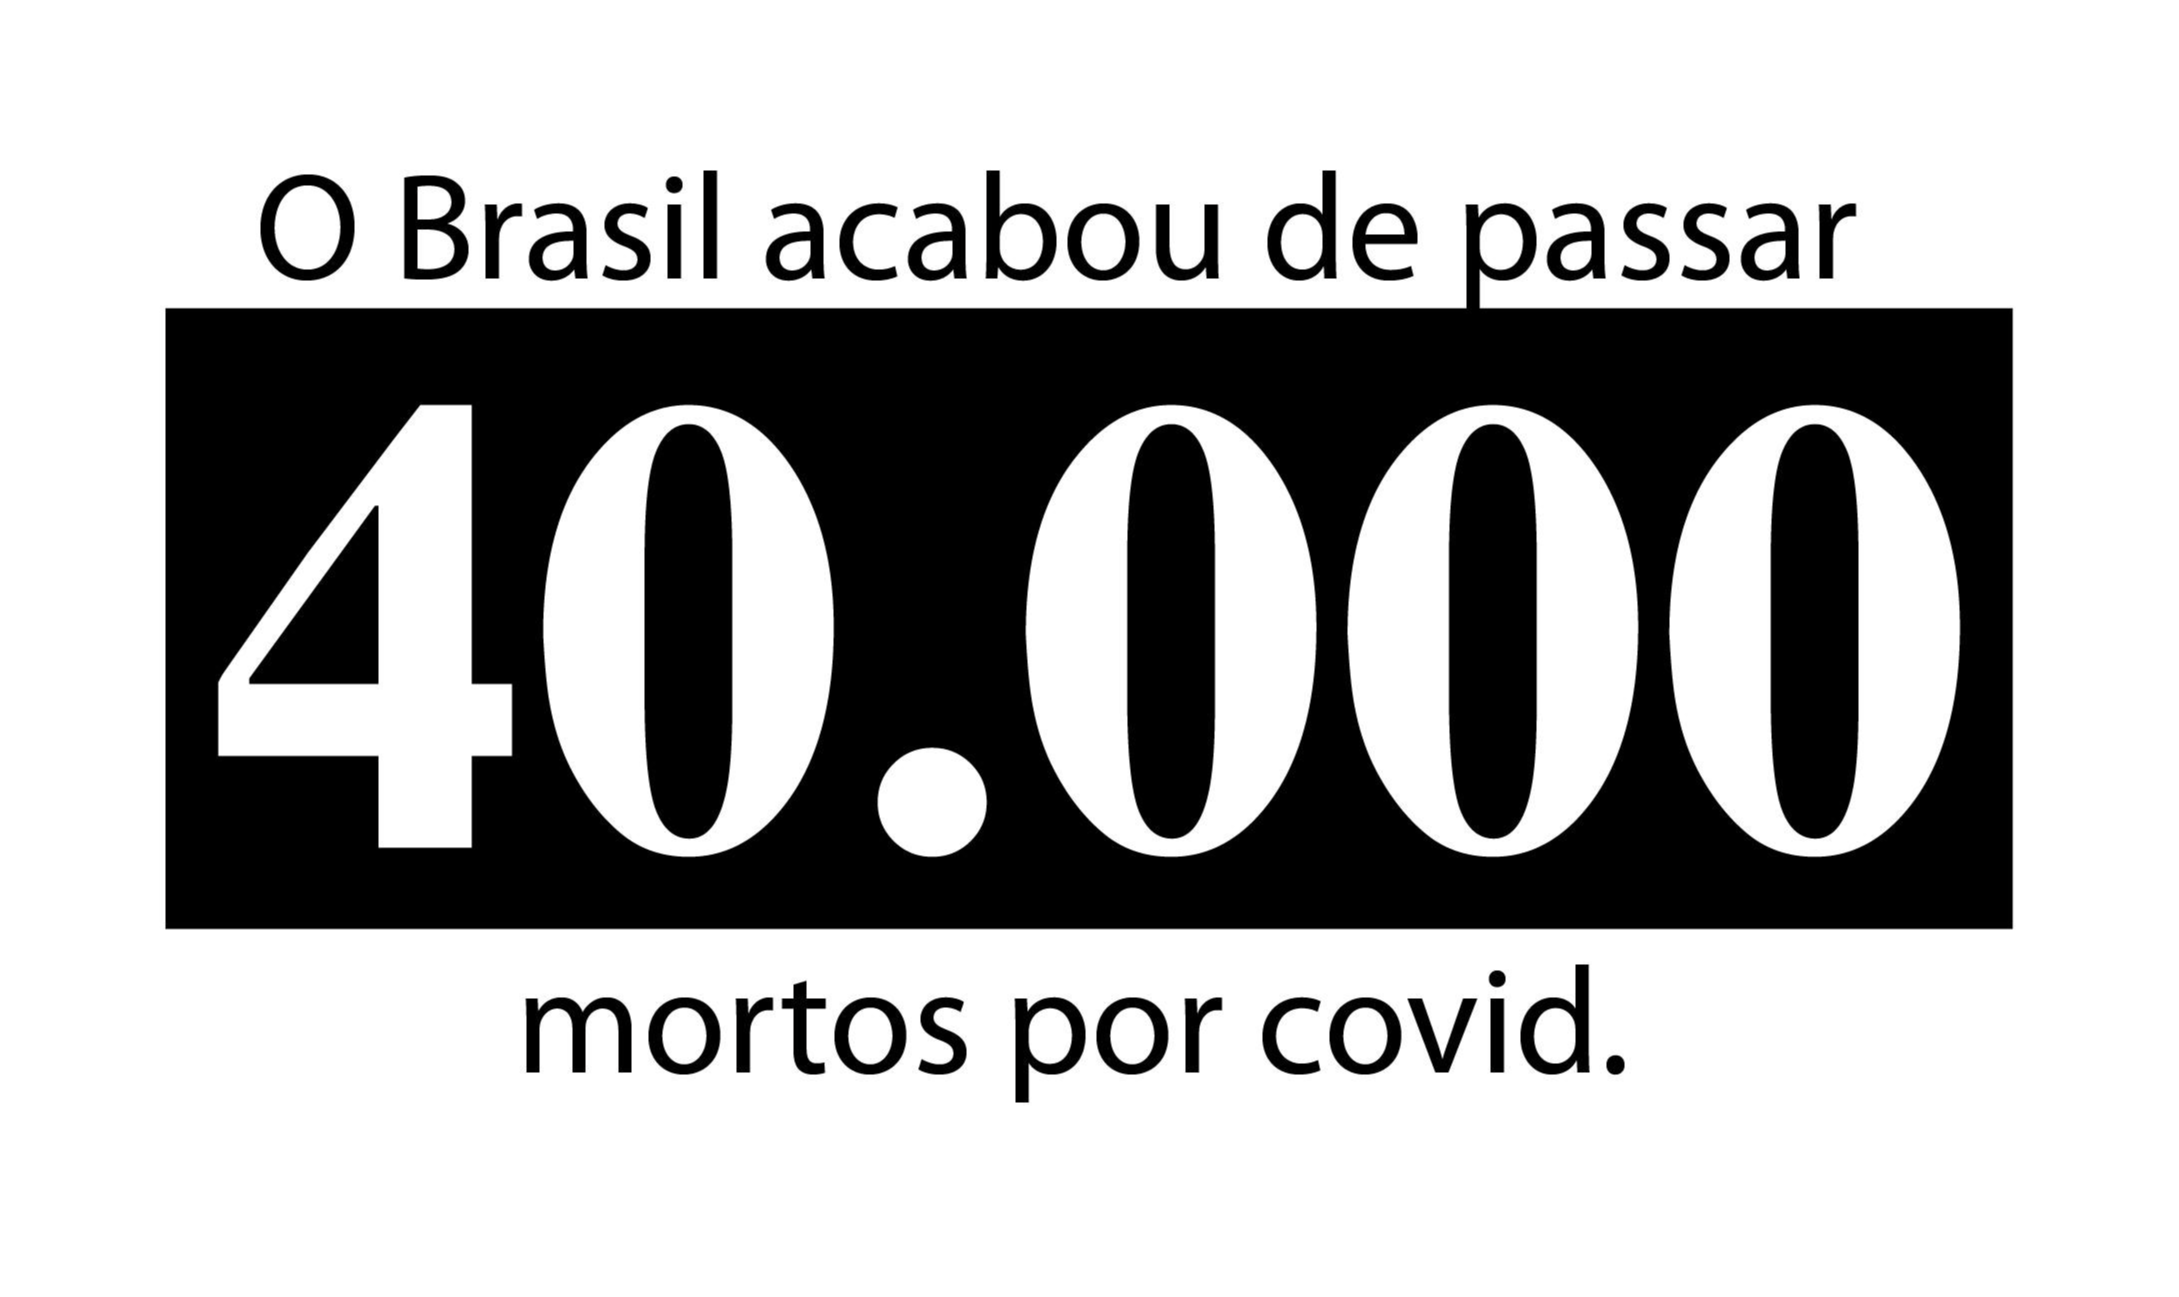 O Brasil acabou de passar 40.000 mortos por covid-19